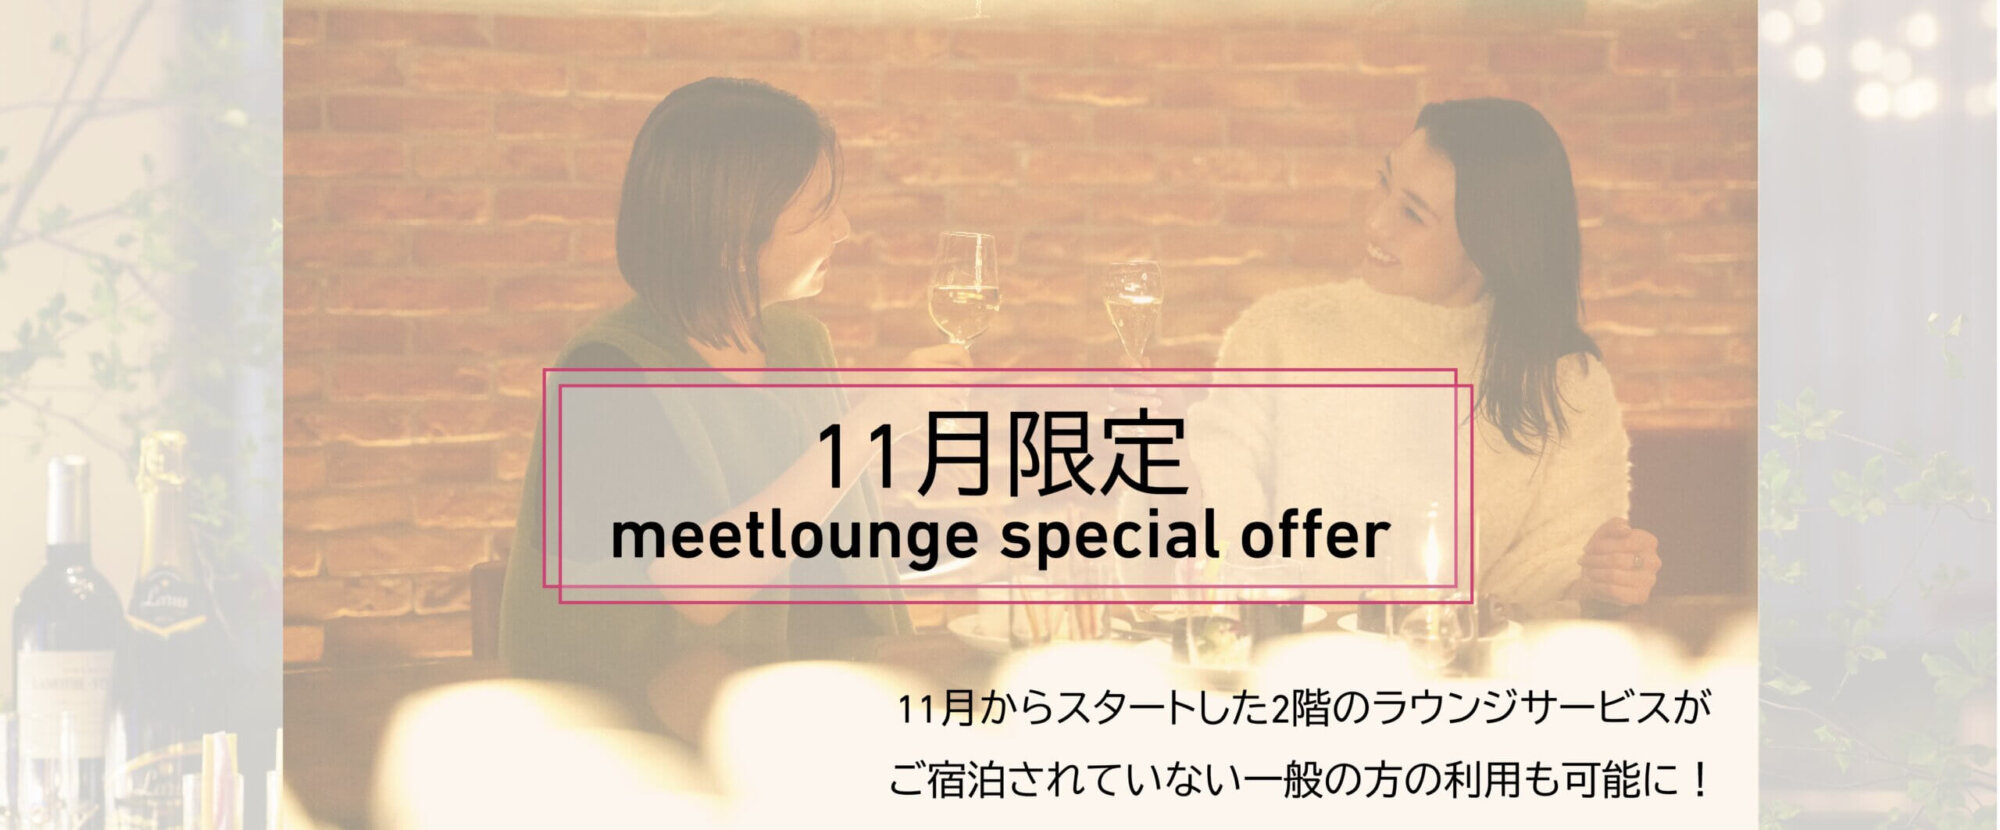 11月限定 meetlounge special offer